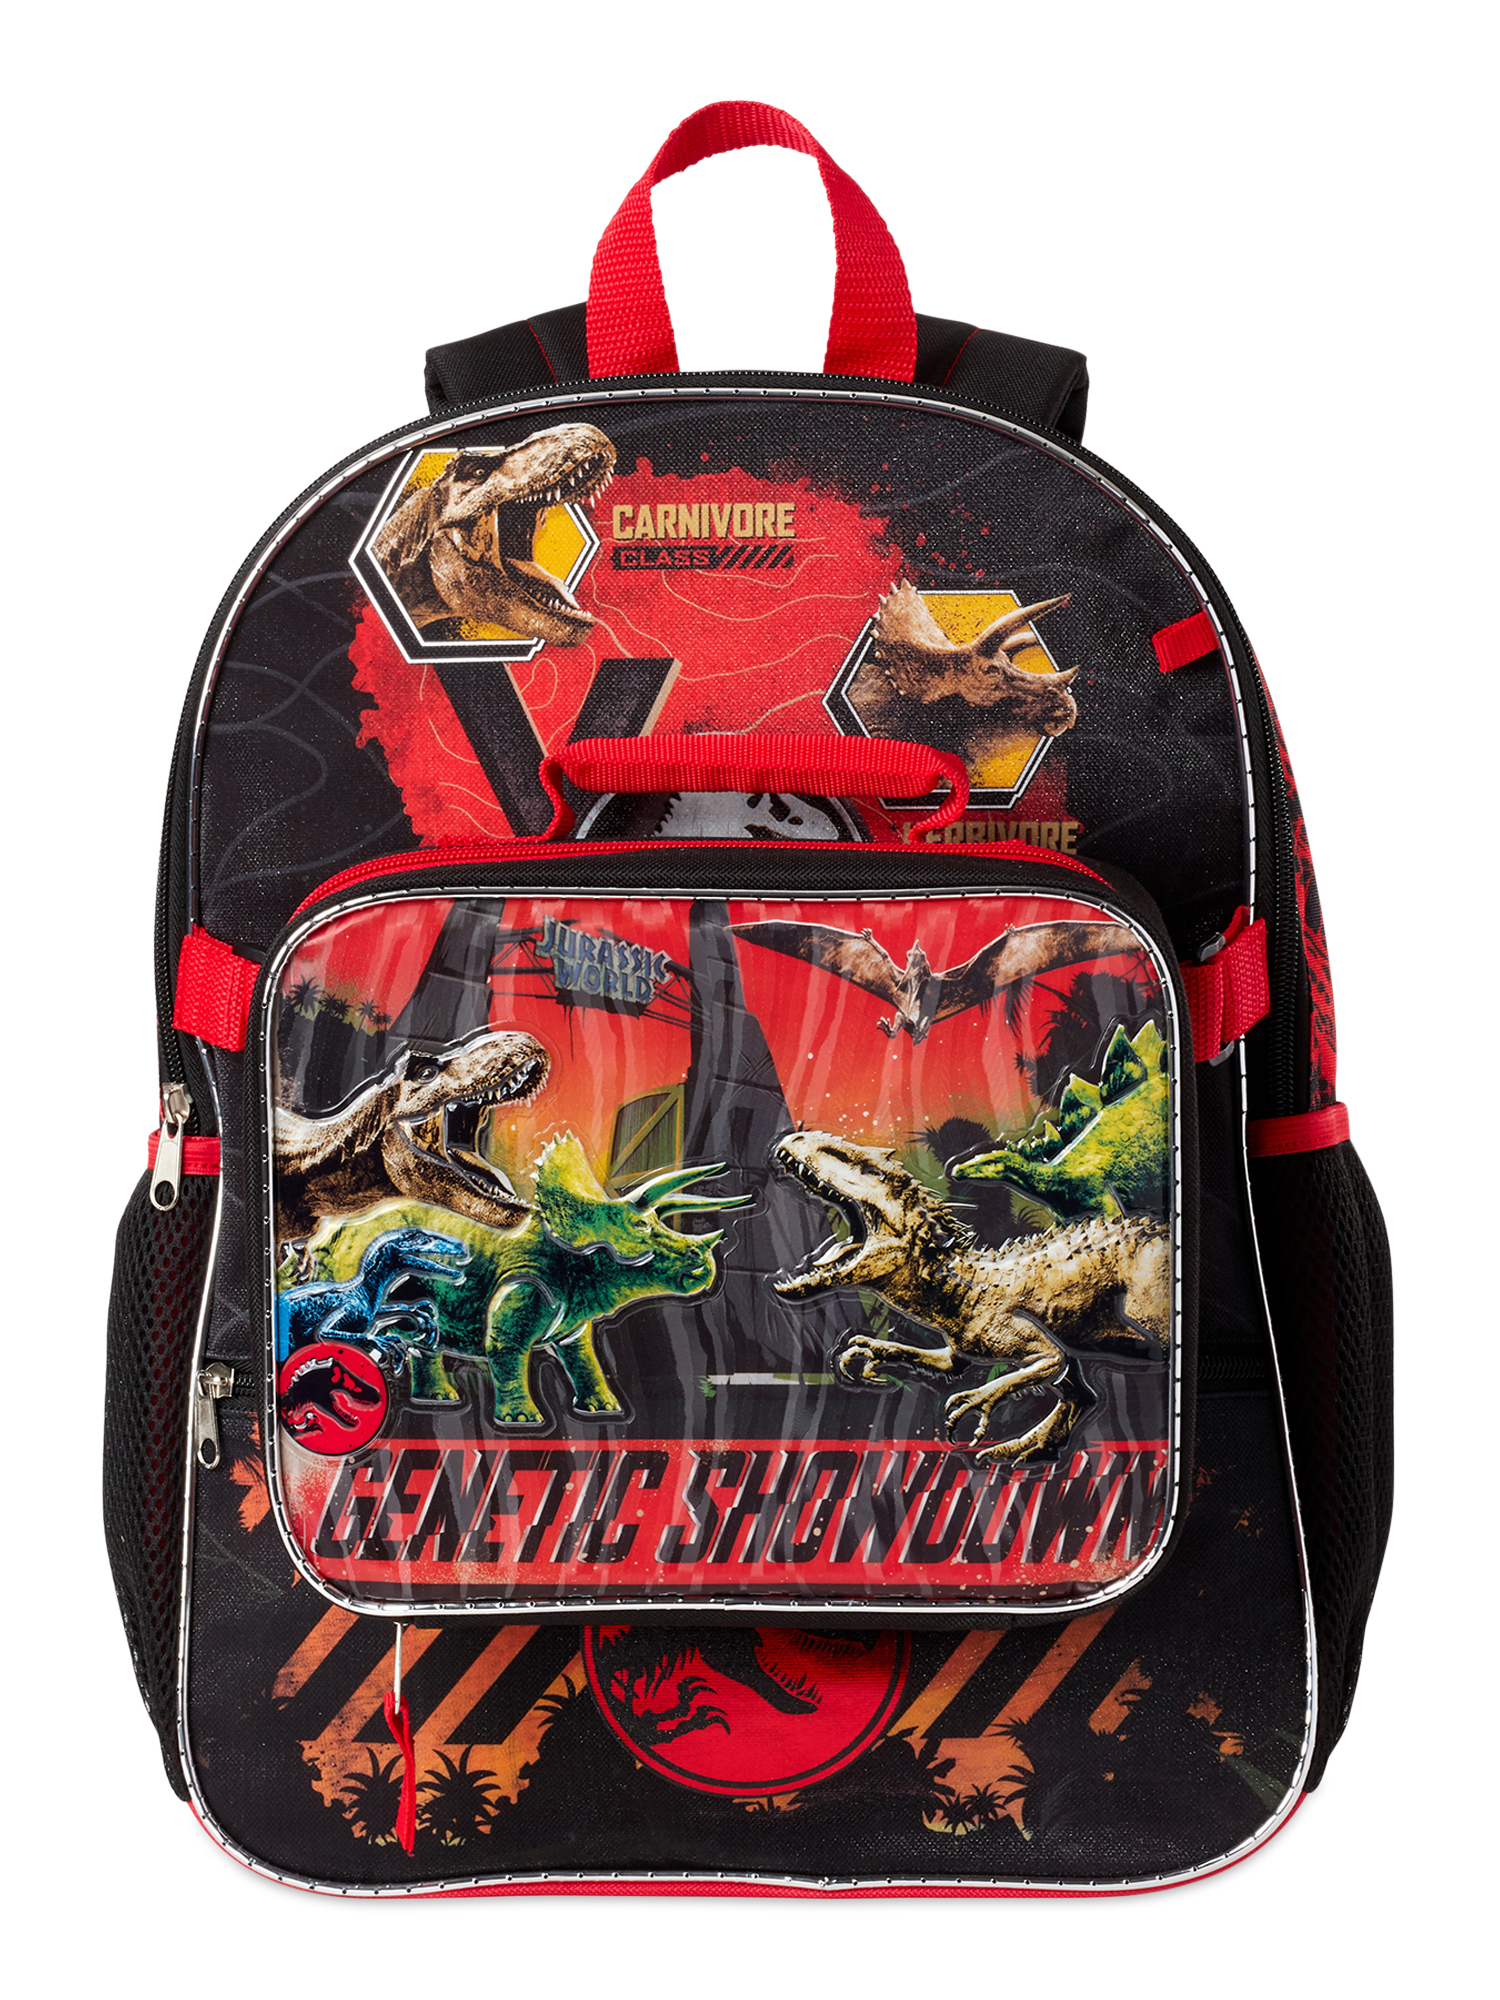 Jurassic World 5 Piece Backpack Set - image 2 of 4